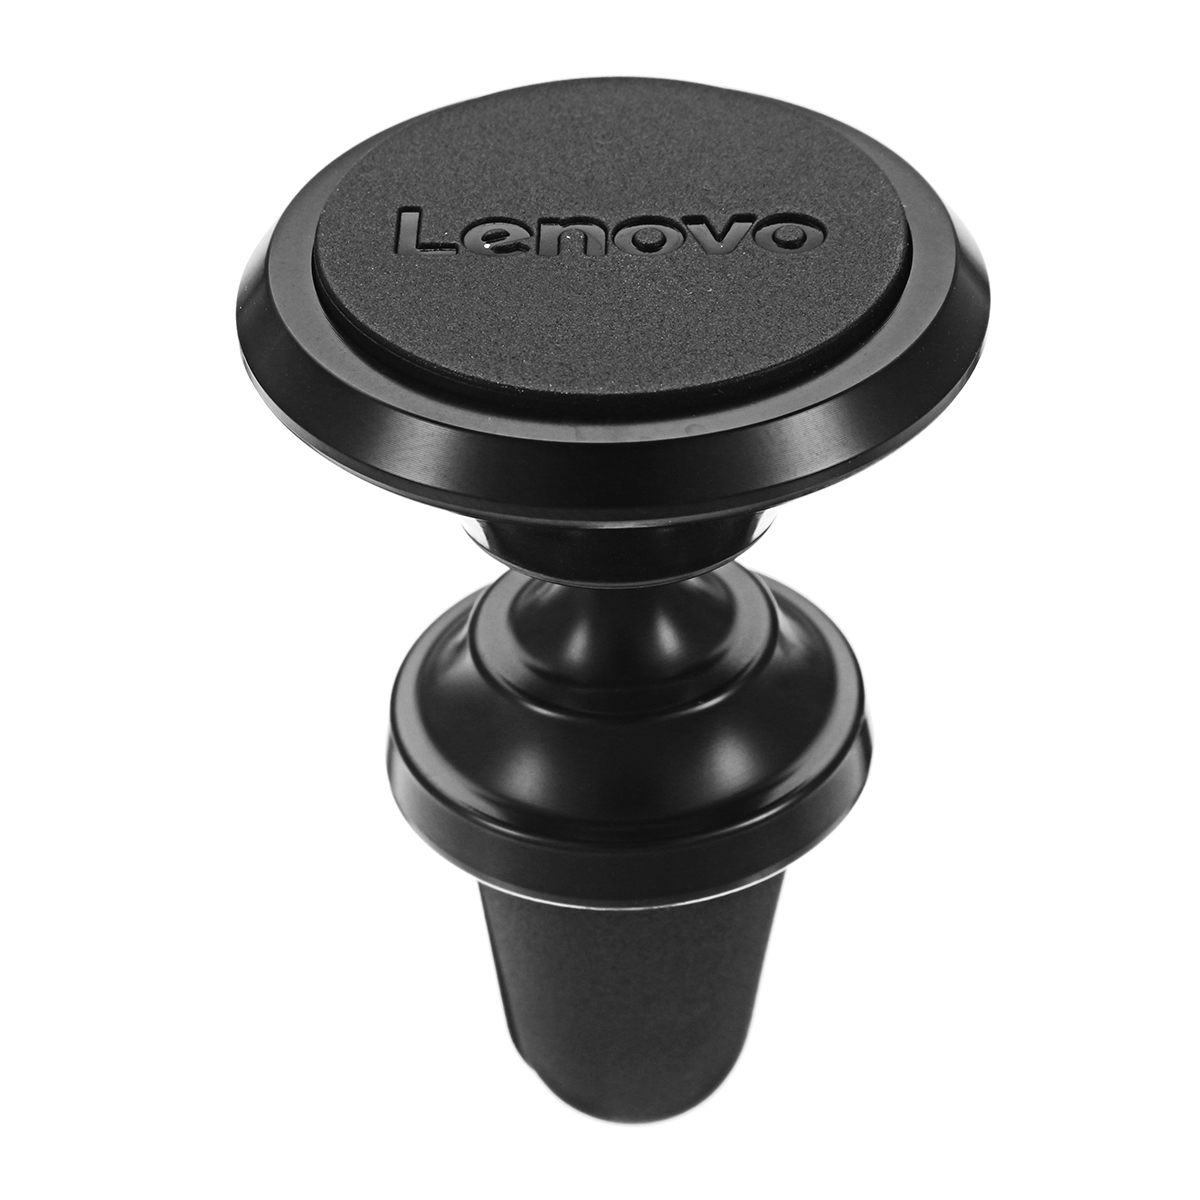 LENOVO-HQ01-01-Smartphones-Pads-Magnetic-Air-Vent-Car-Phone-Holder-1302057